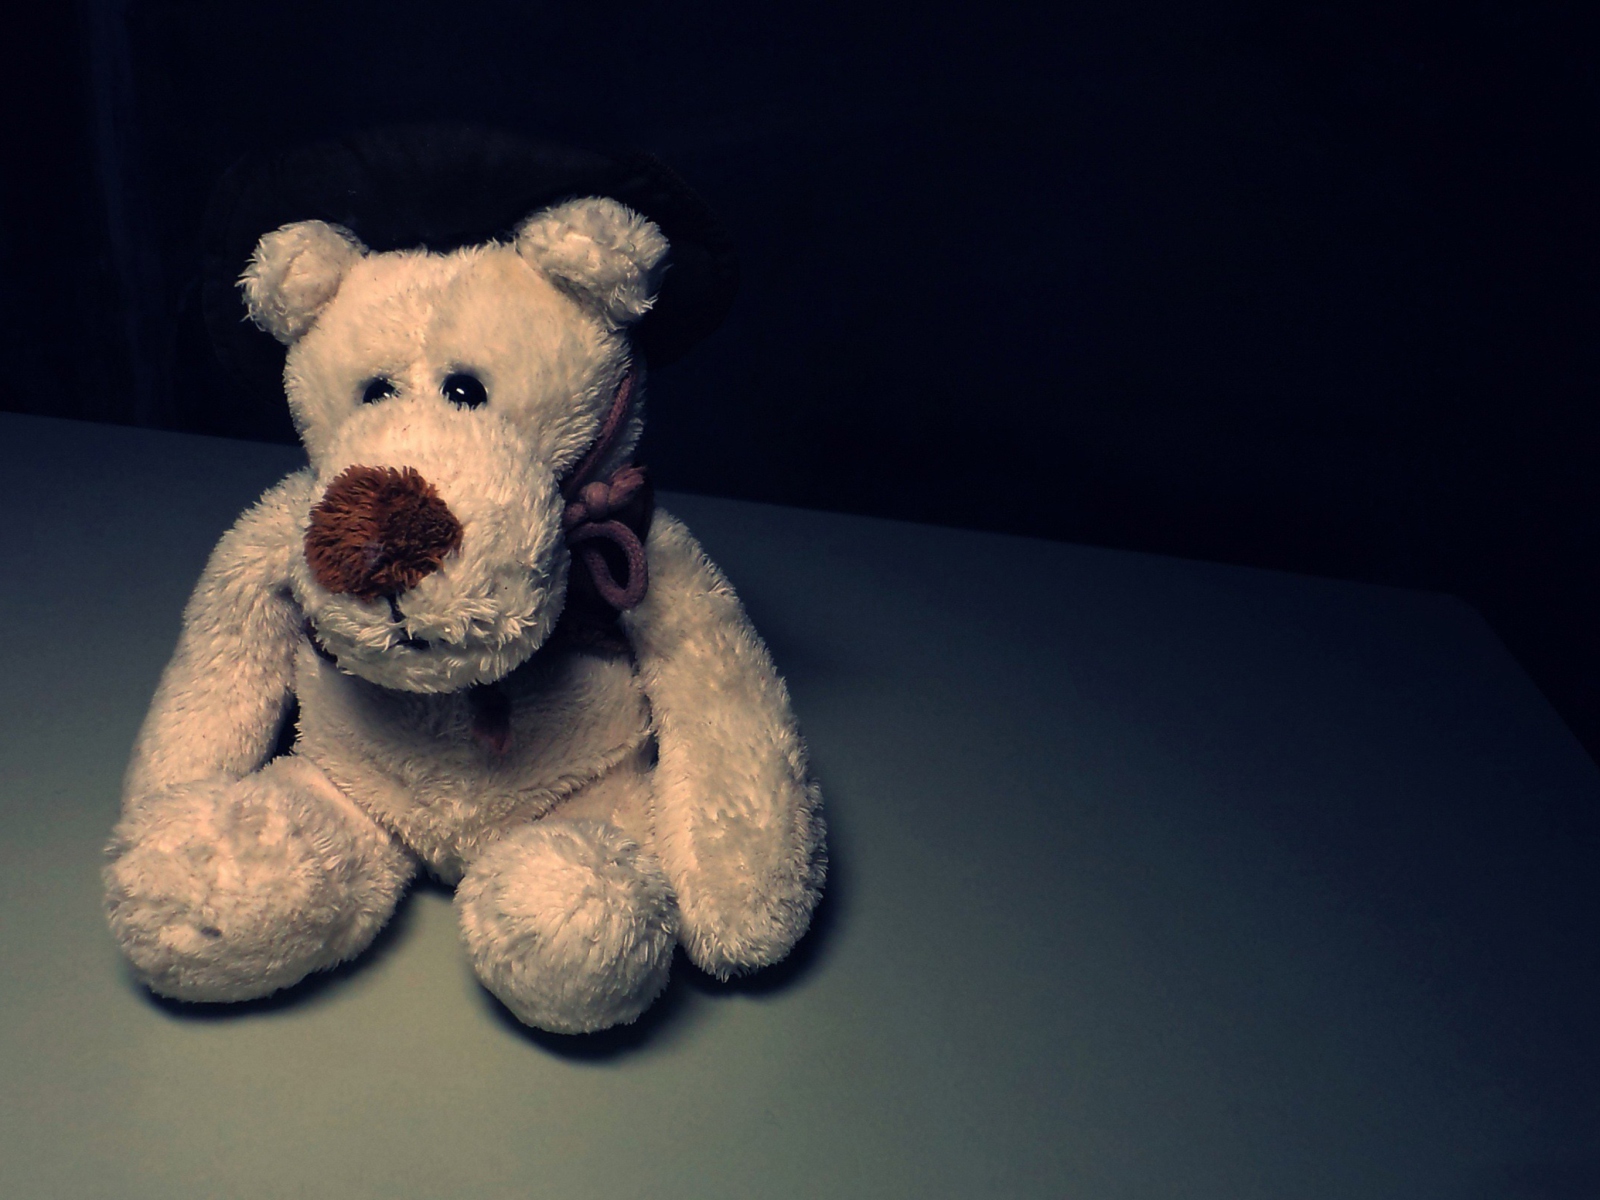 Sad Teddy Bear Sitting Alone wallpaper 1600x1200